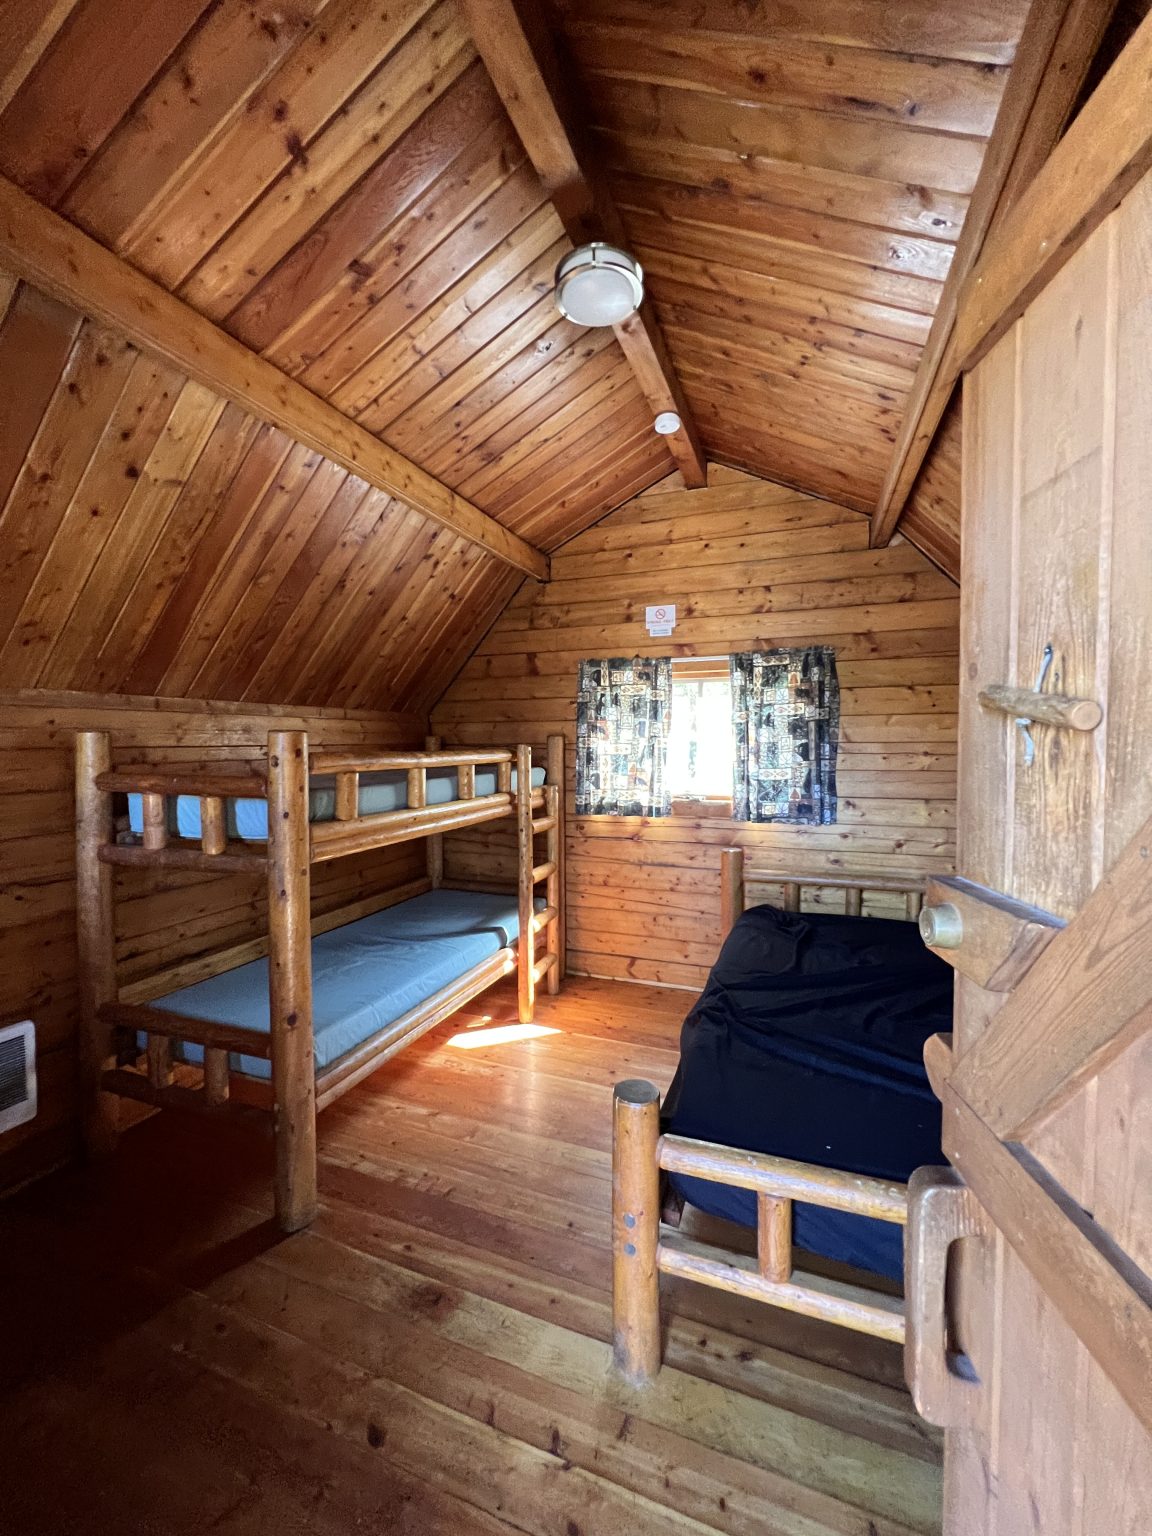 The inside of a KOA log cabin.